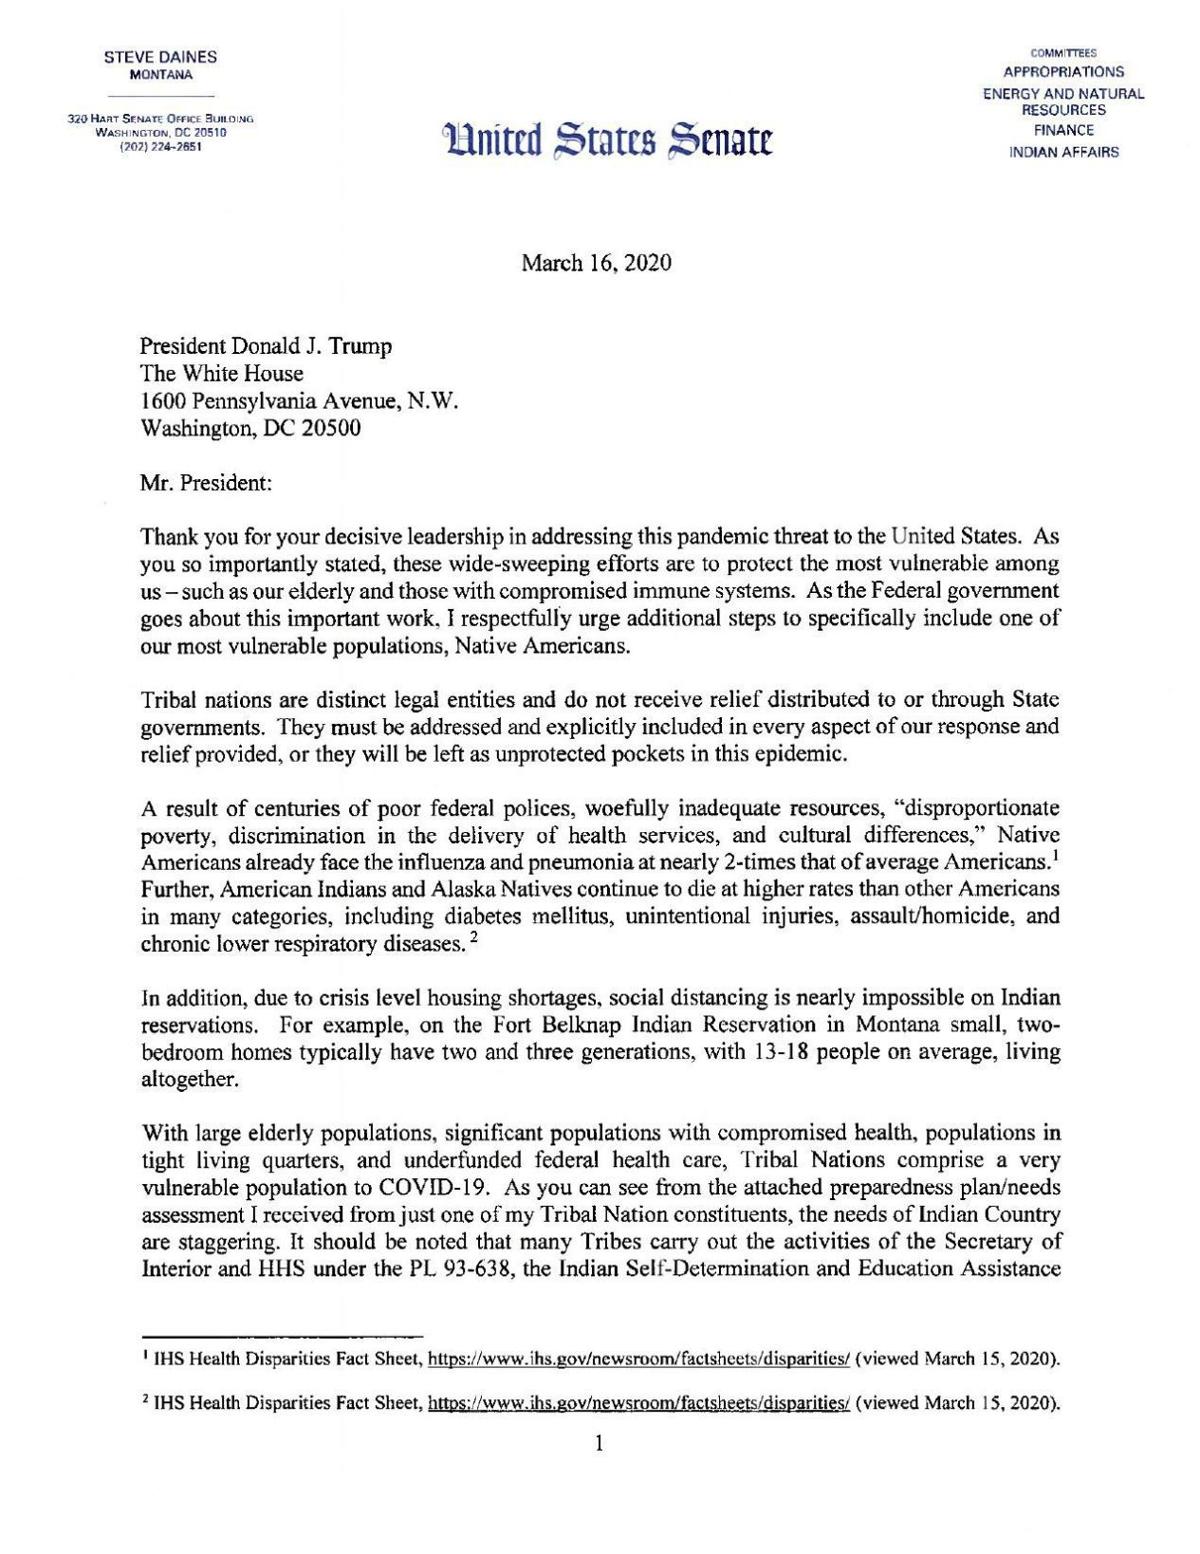 Letter to President Trump from Steve Daines  Regional  khq.com